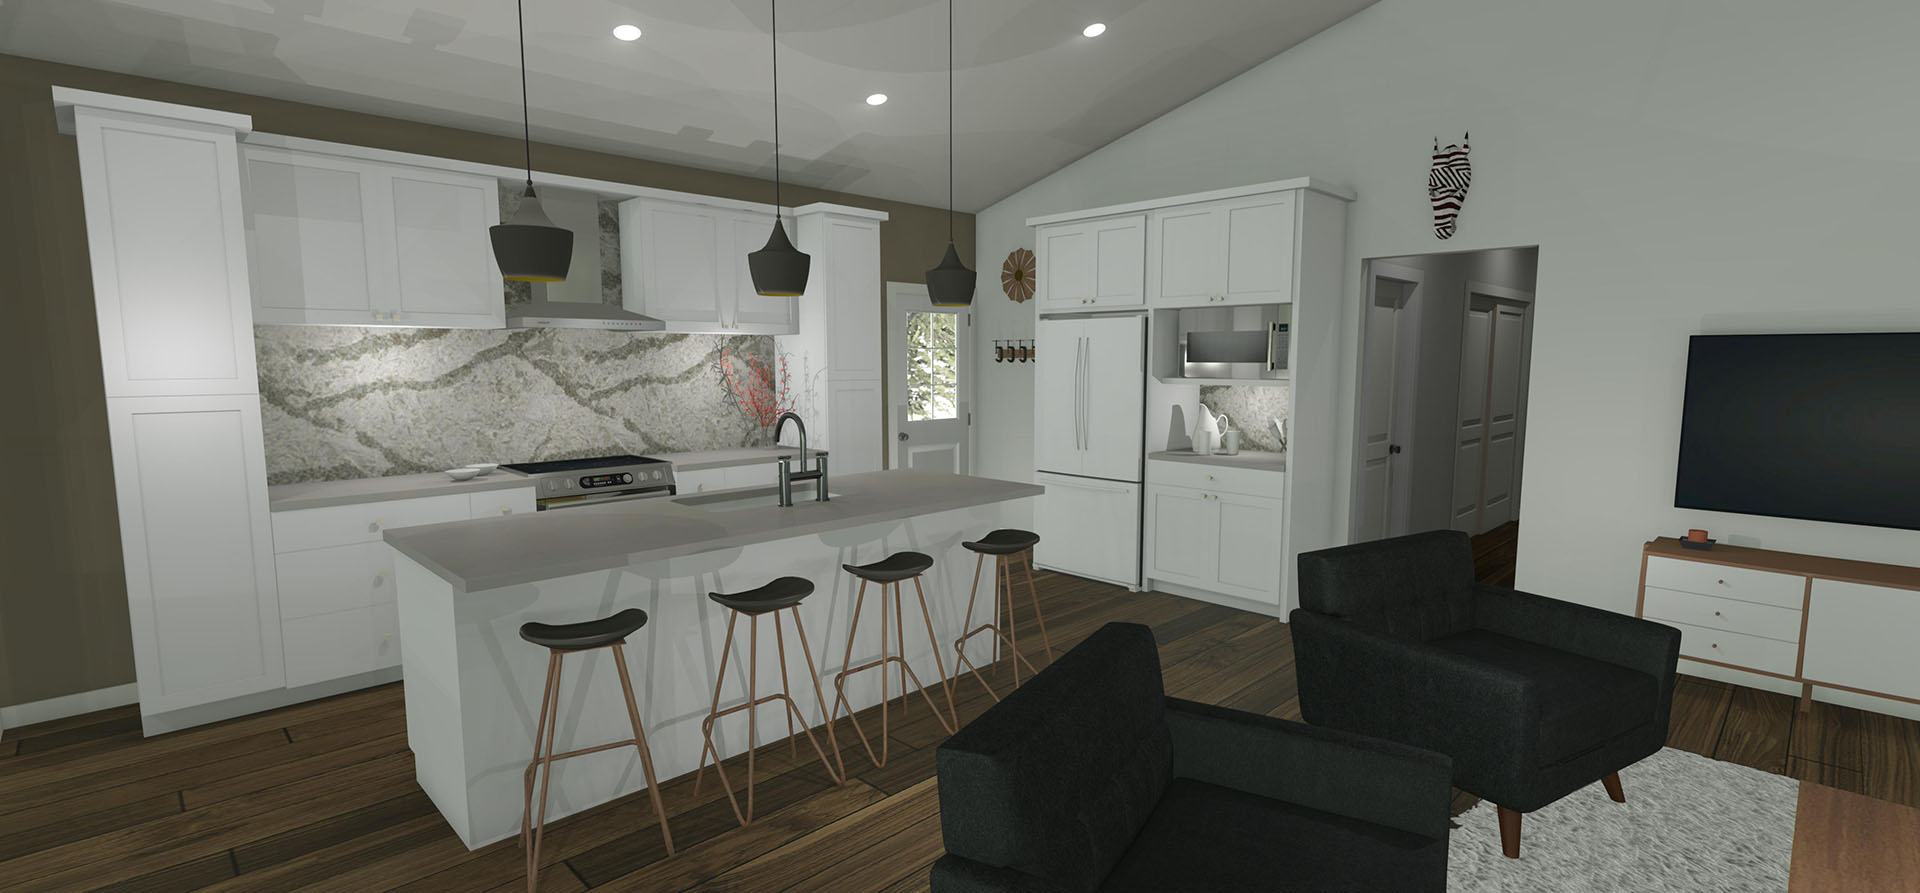 Pikake interior kitchen area and living room